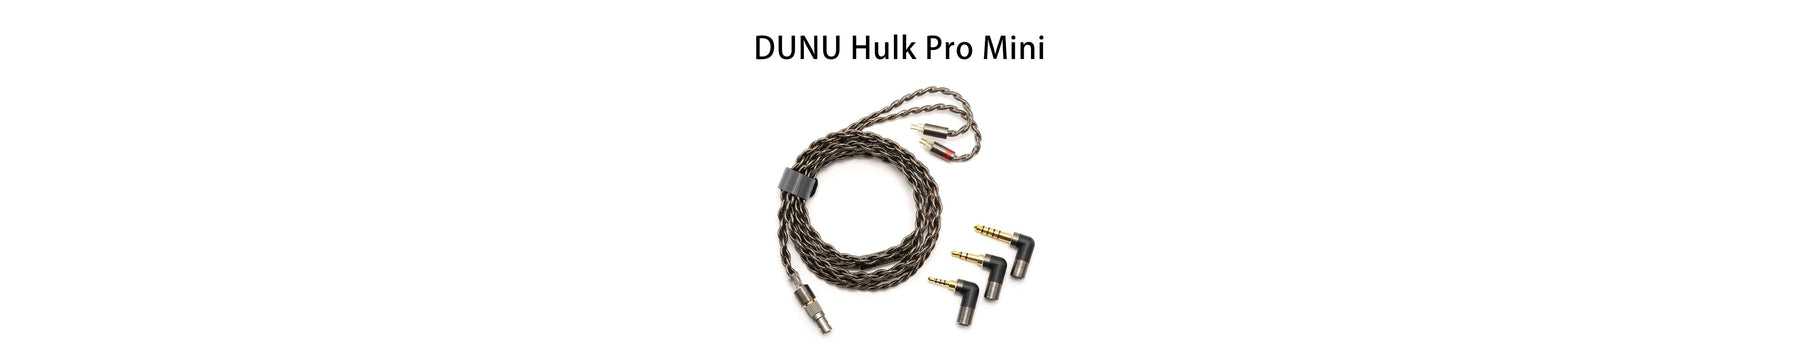 DUNU Hulk Pro Mini: Single Crystal Furukawa Copper IEM Upgrade Cable